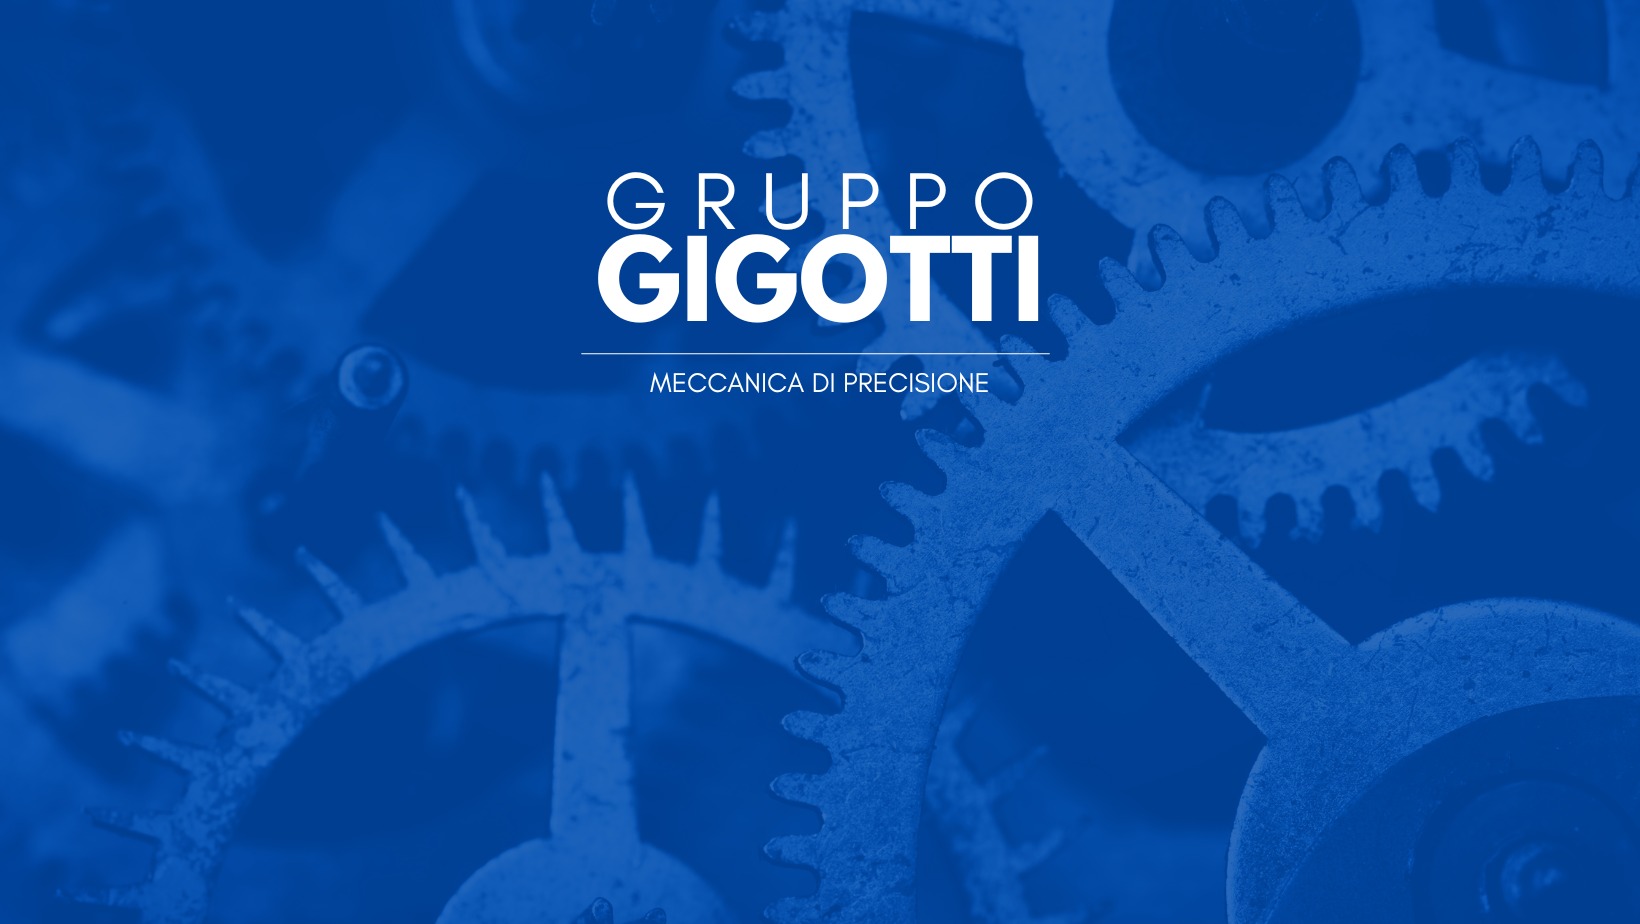 Gruppo Gigotti